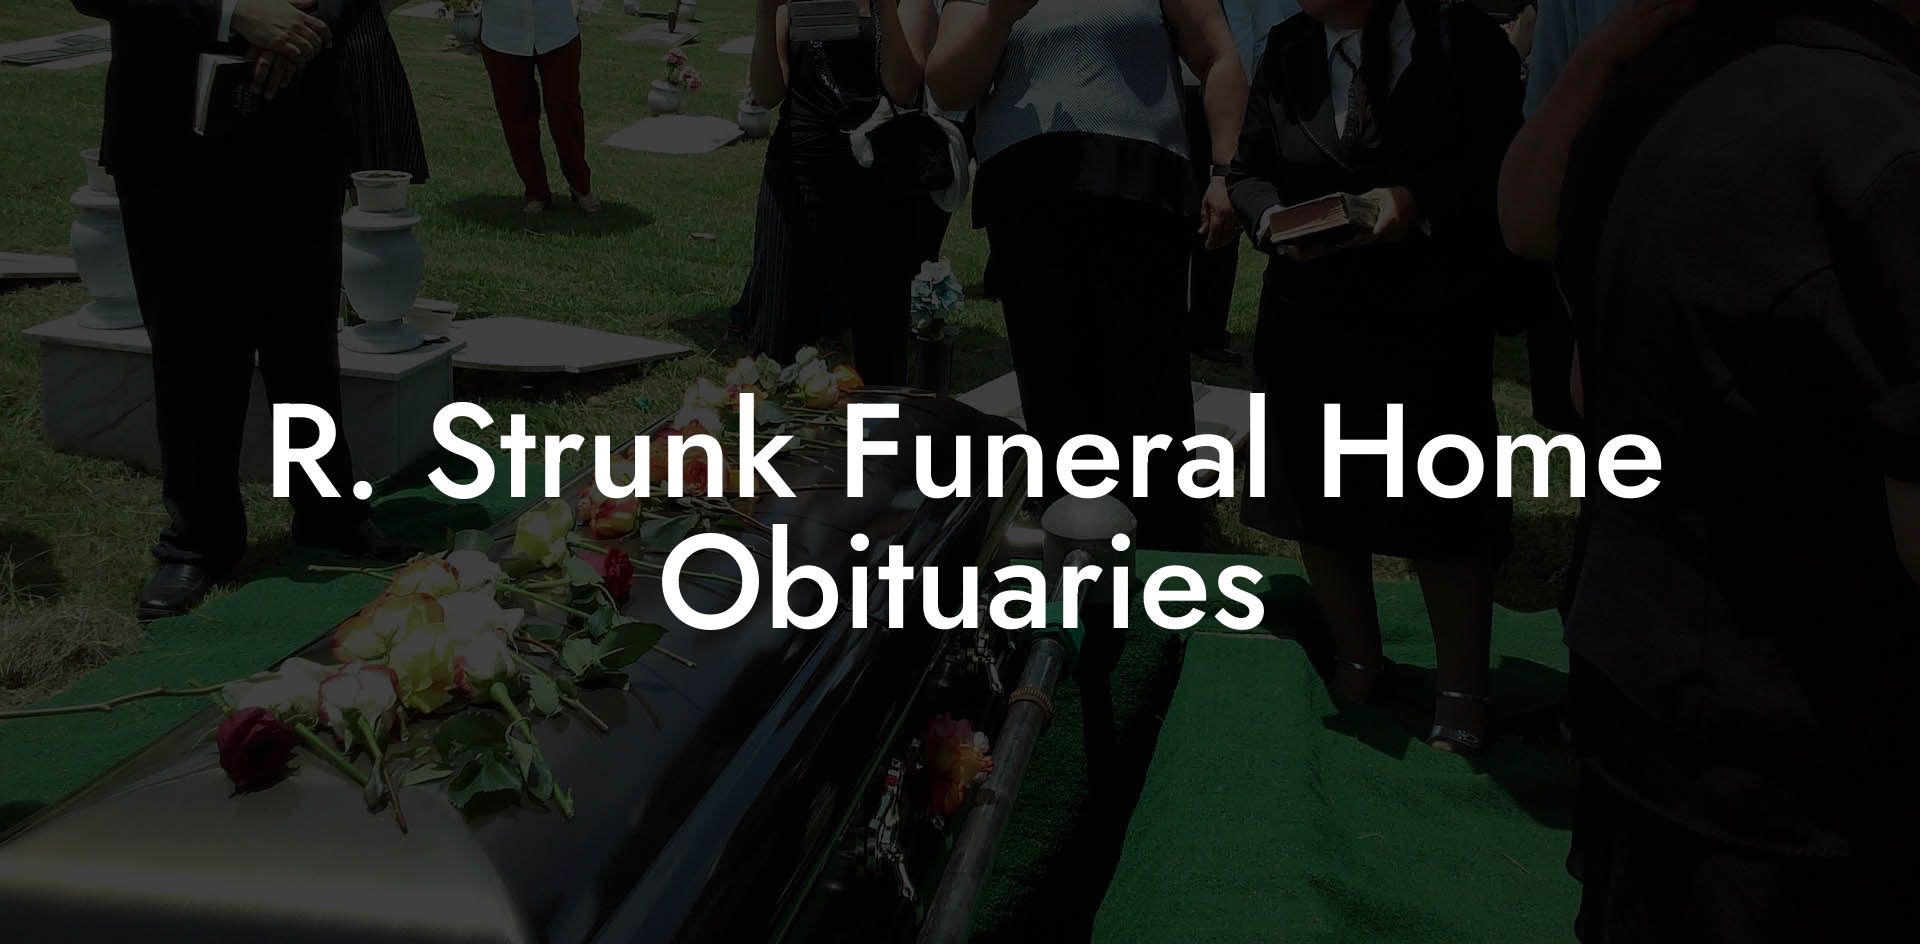 R. Strunk Funeral Home Obituaries